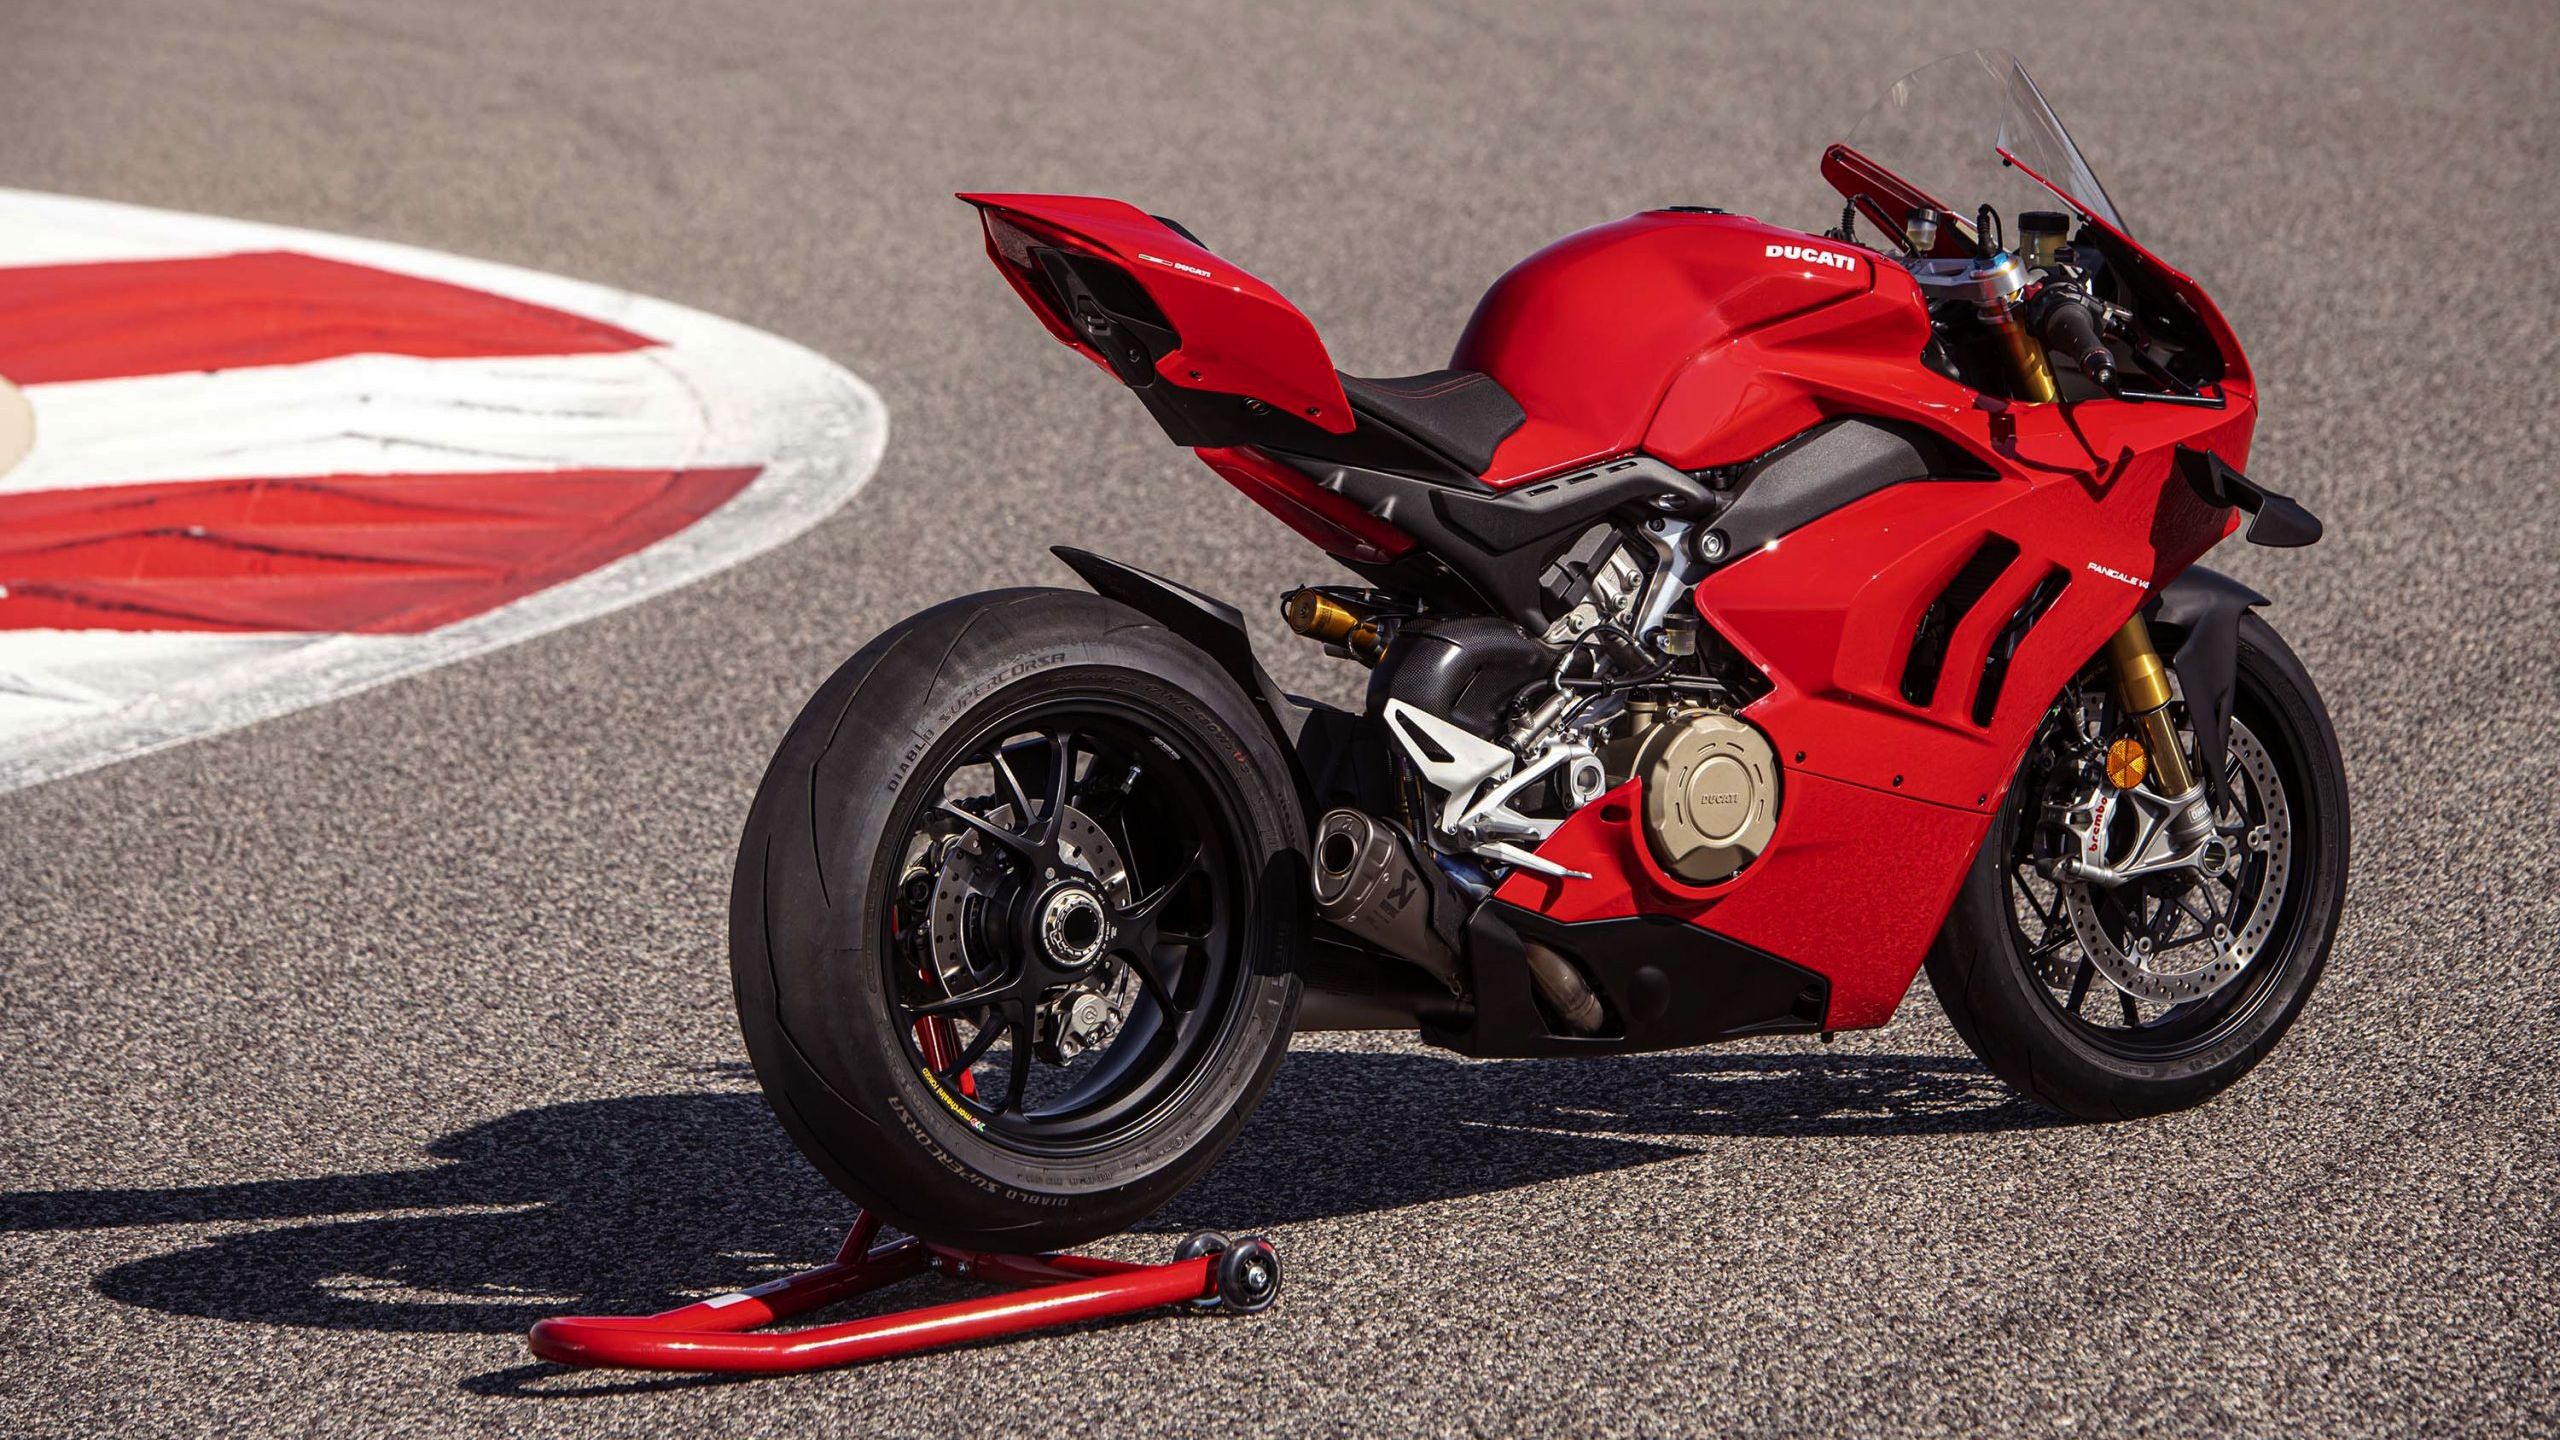 Zastaki.com - Красный мотоцикл Ducati Panigale V4 S  2020 года на асфальте 